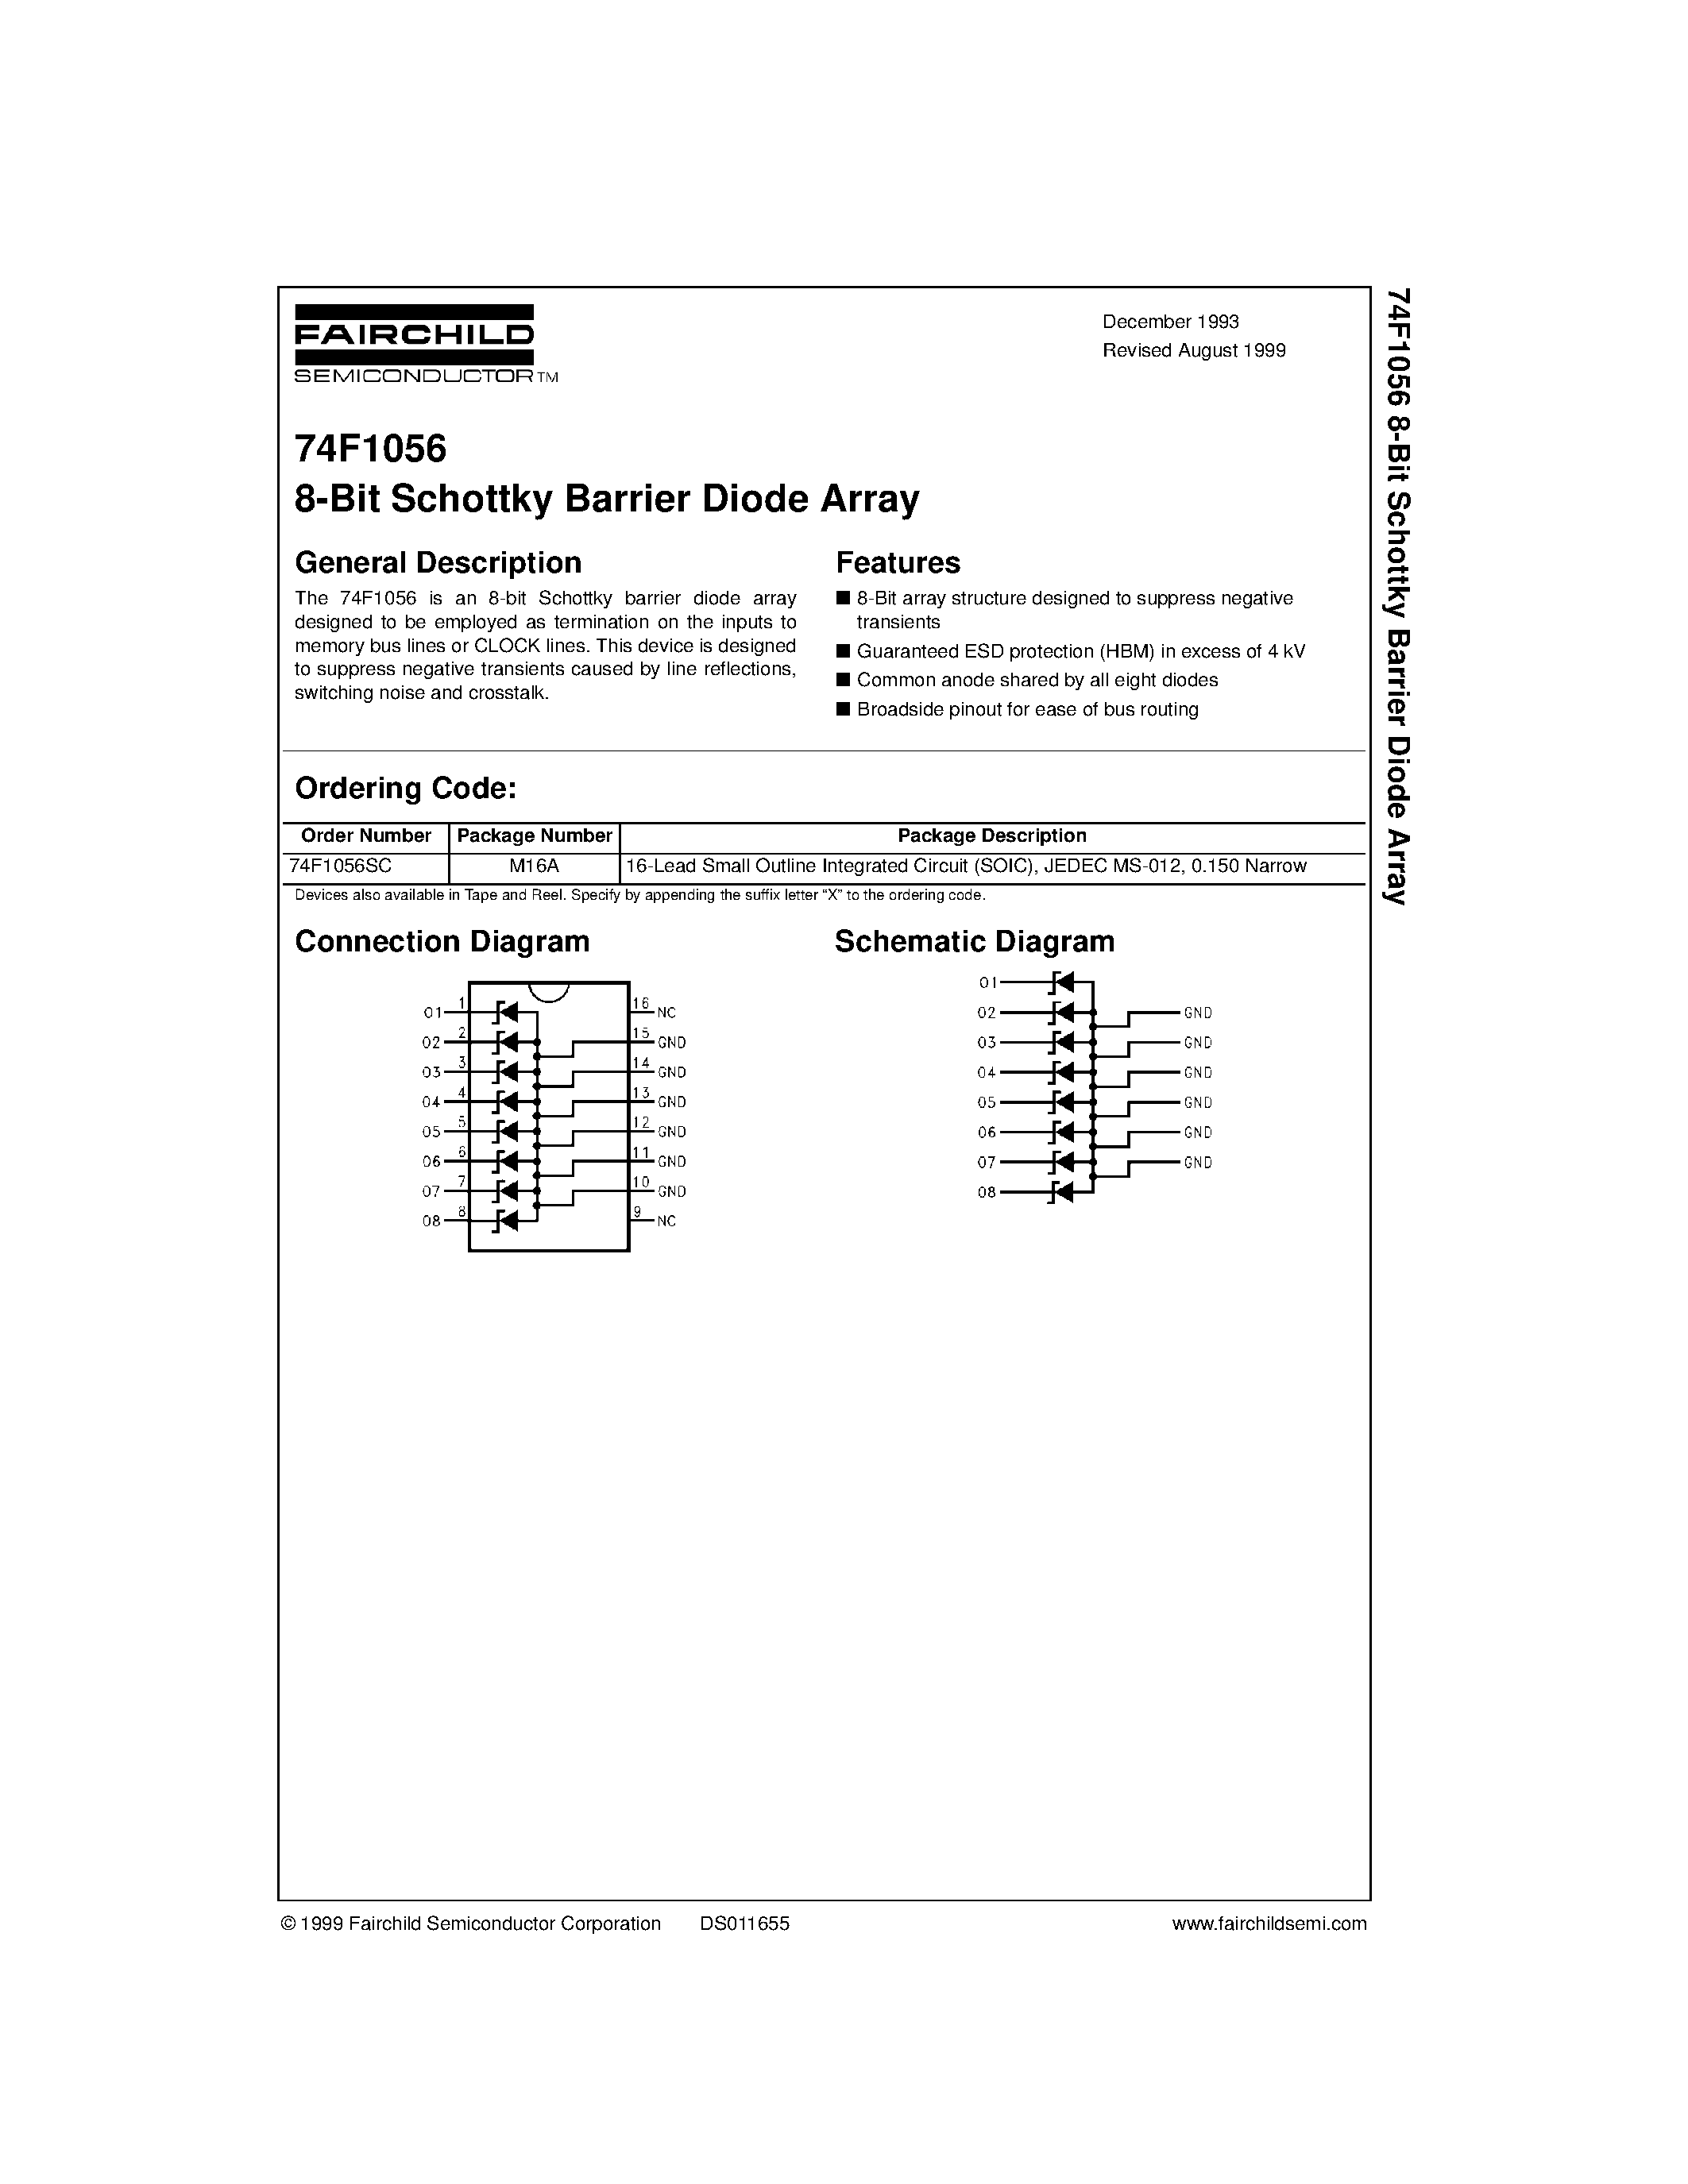 Datasheet 74F1056 - 8-Bit Schottky Barrier Diode Array page 1